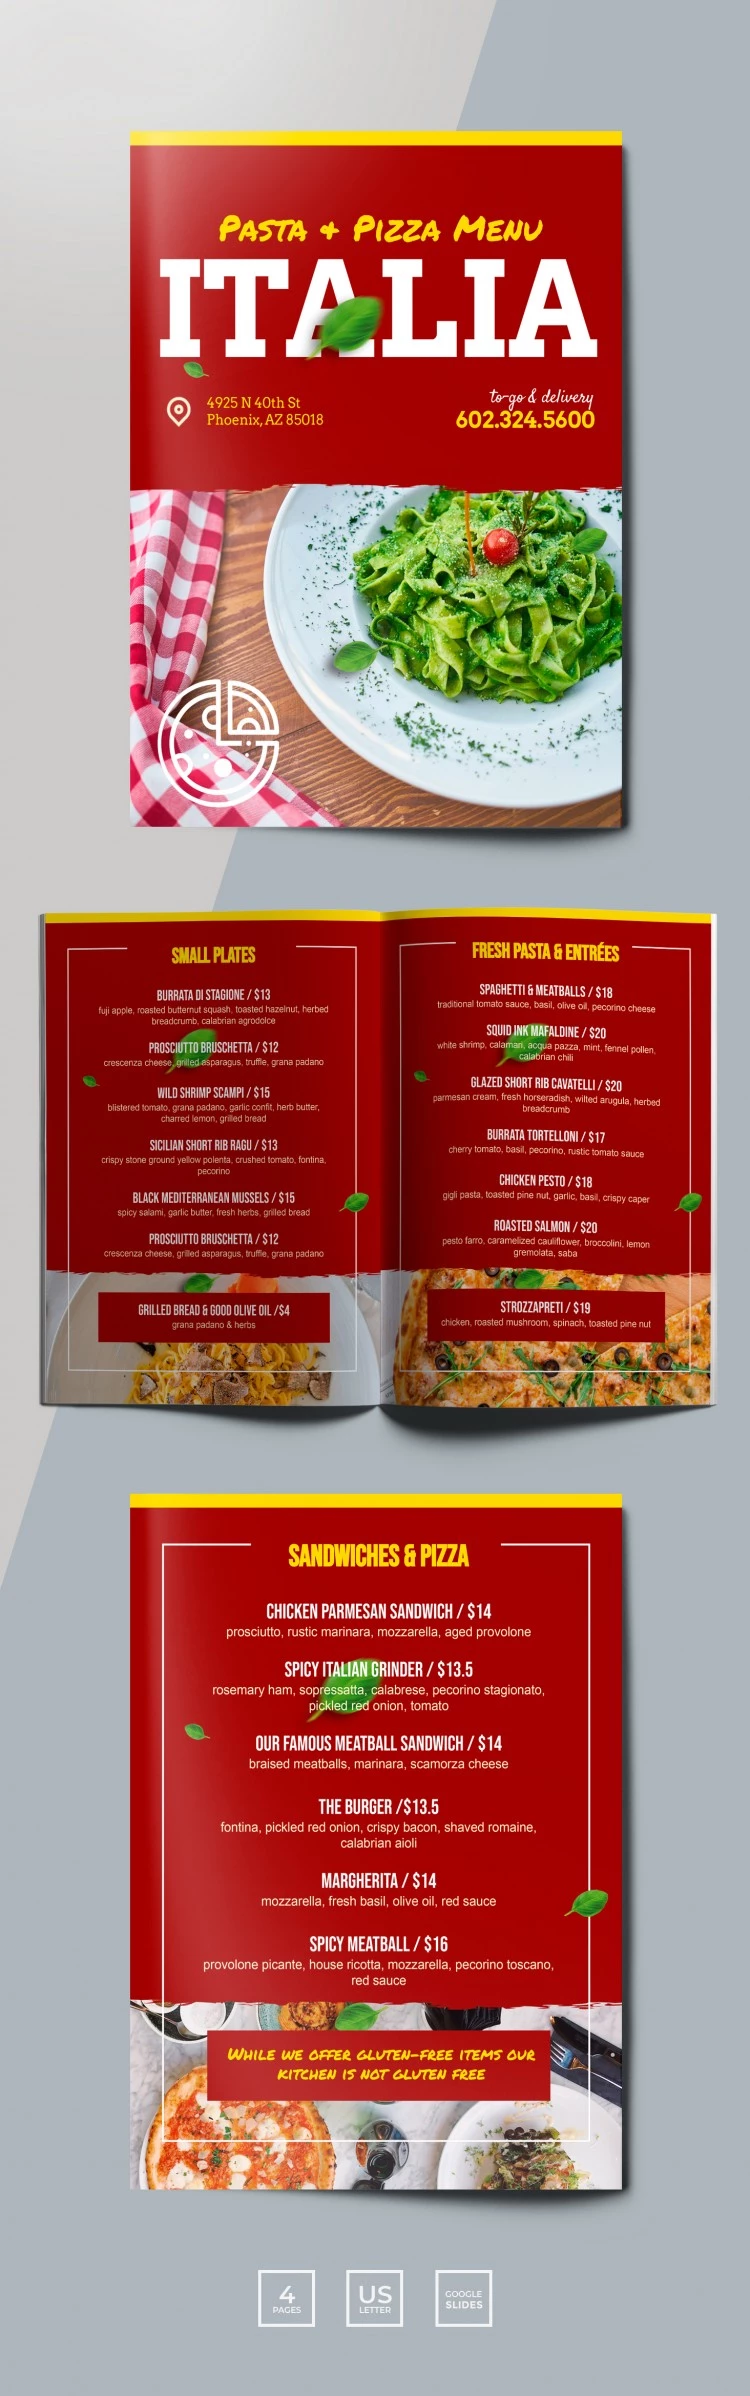 Menú del Restaurante Italiano Rojo - free Google Docs Template - 10061681